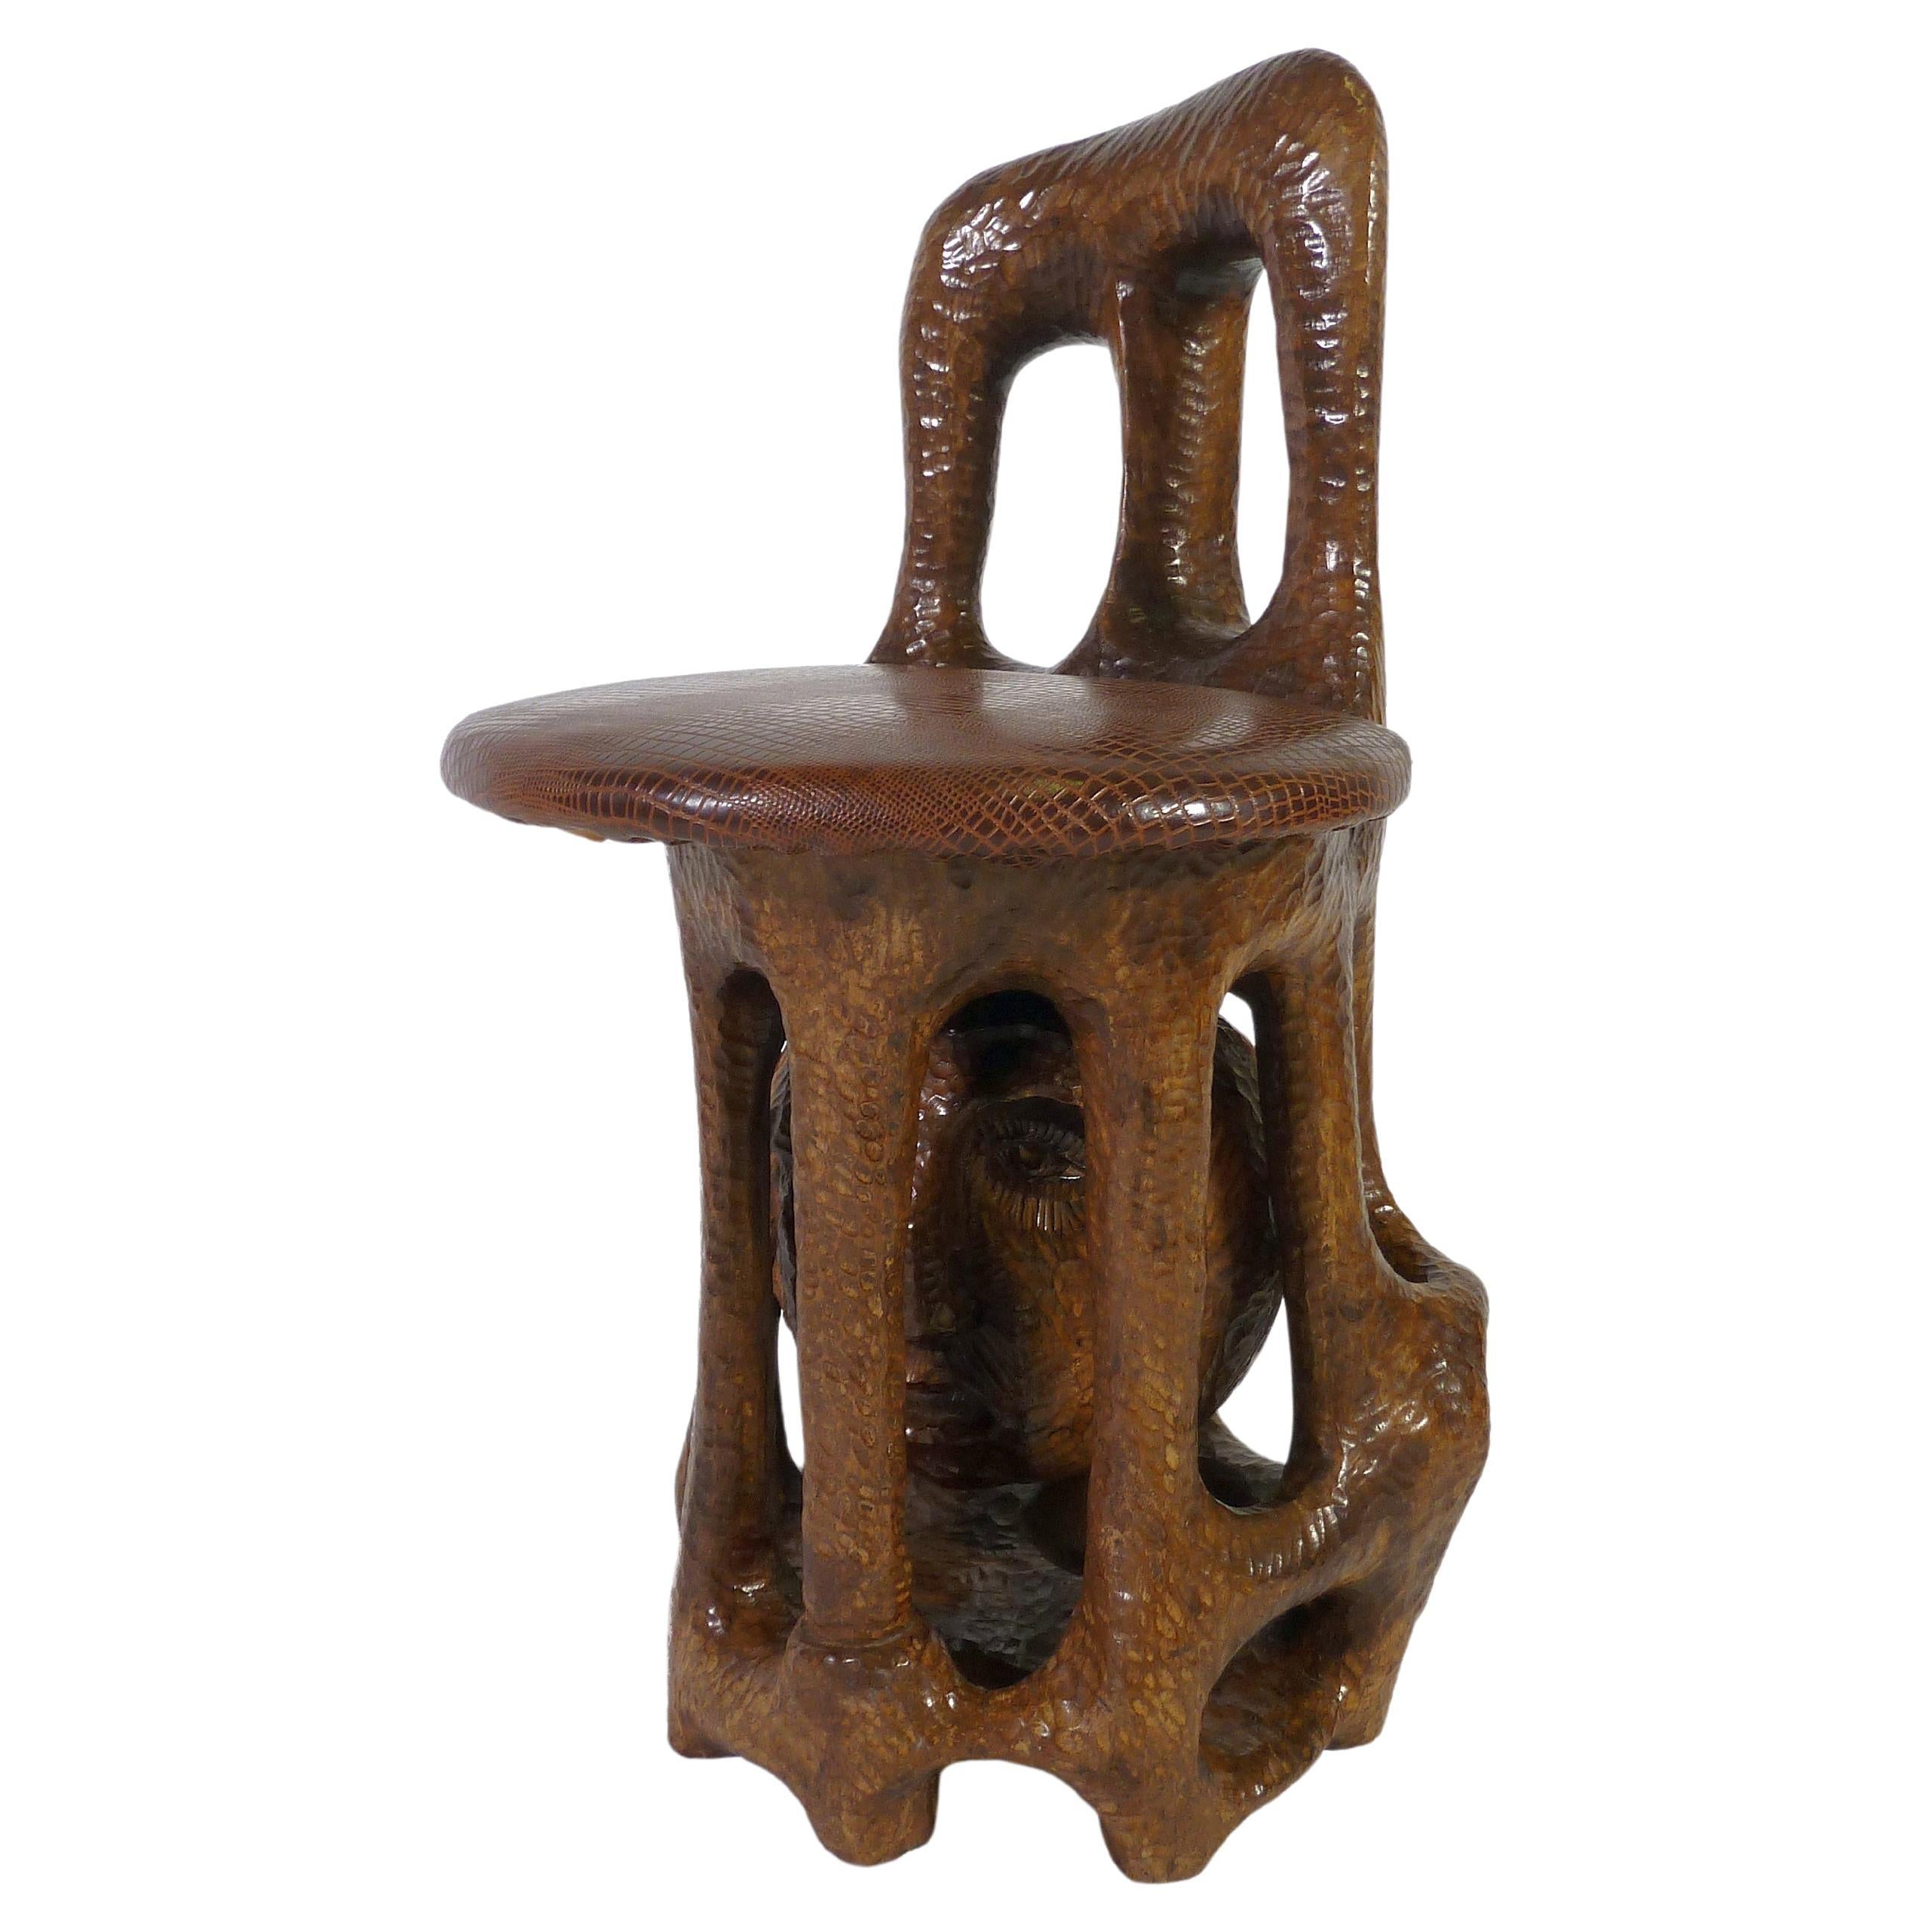 Sol Garson Signed Sculptural Chair 1970s Art Hand Carved Wood Sculpture Mandela